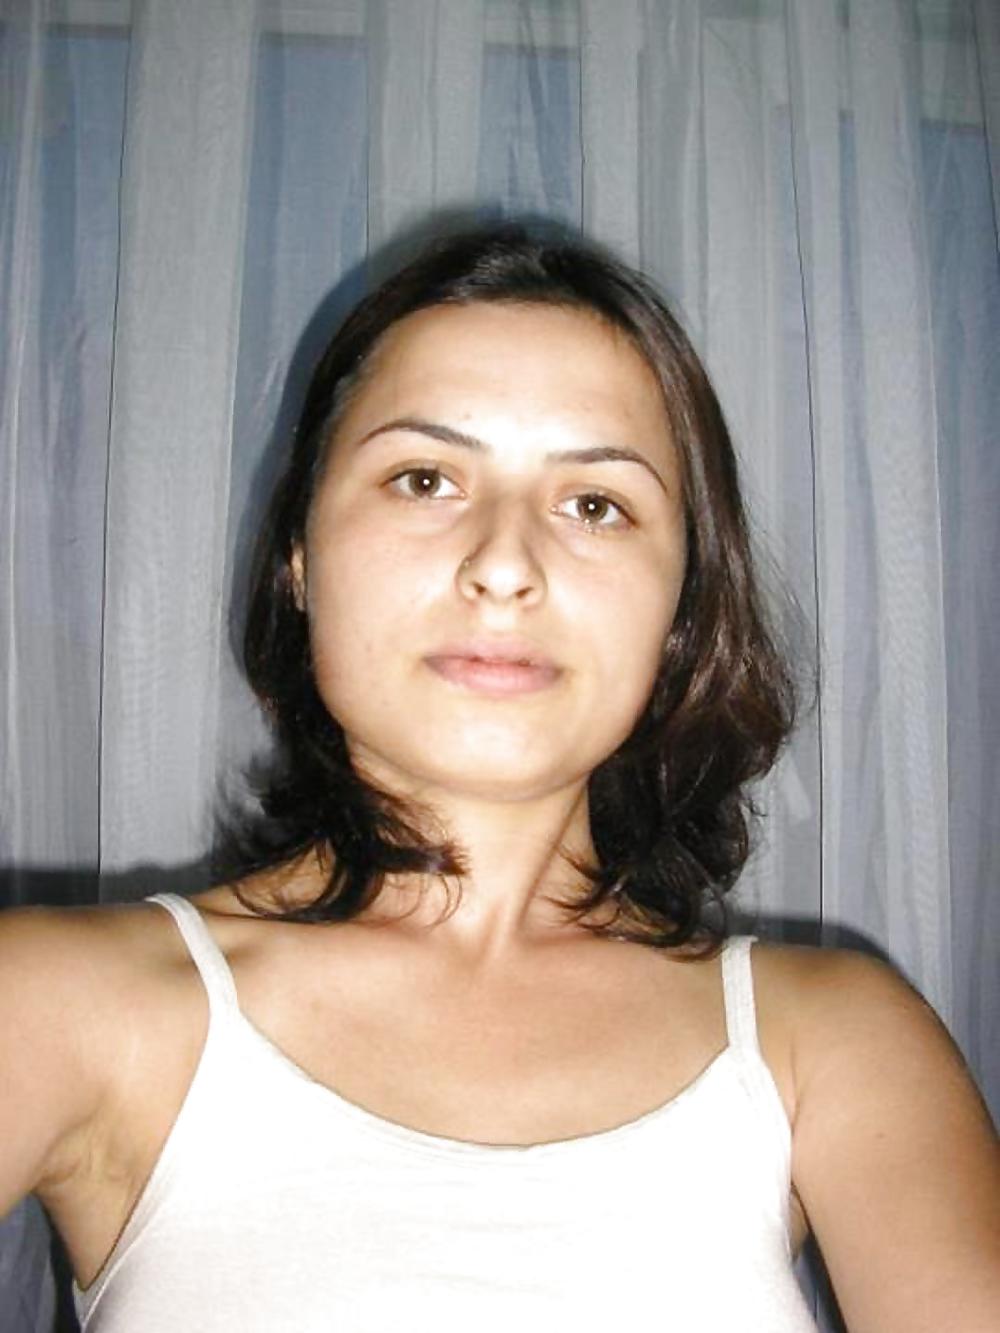 Sex turkish girl image